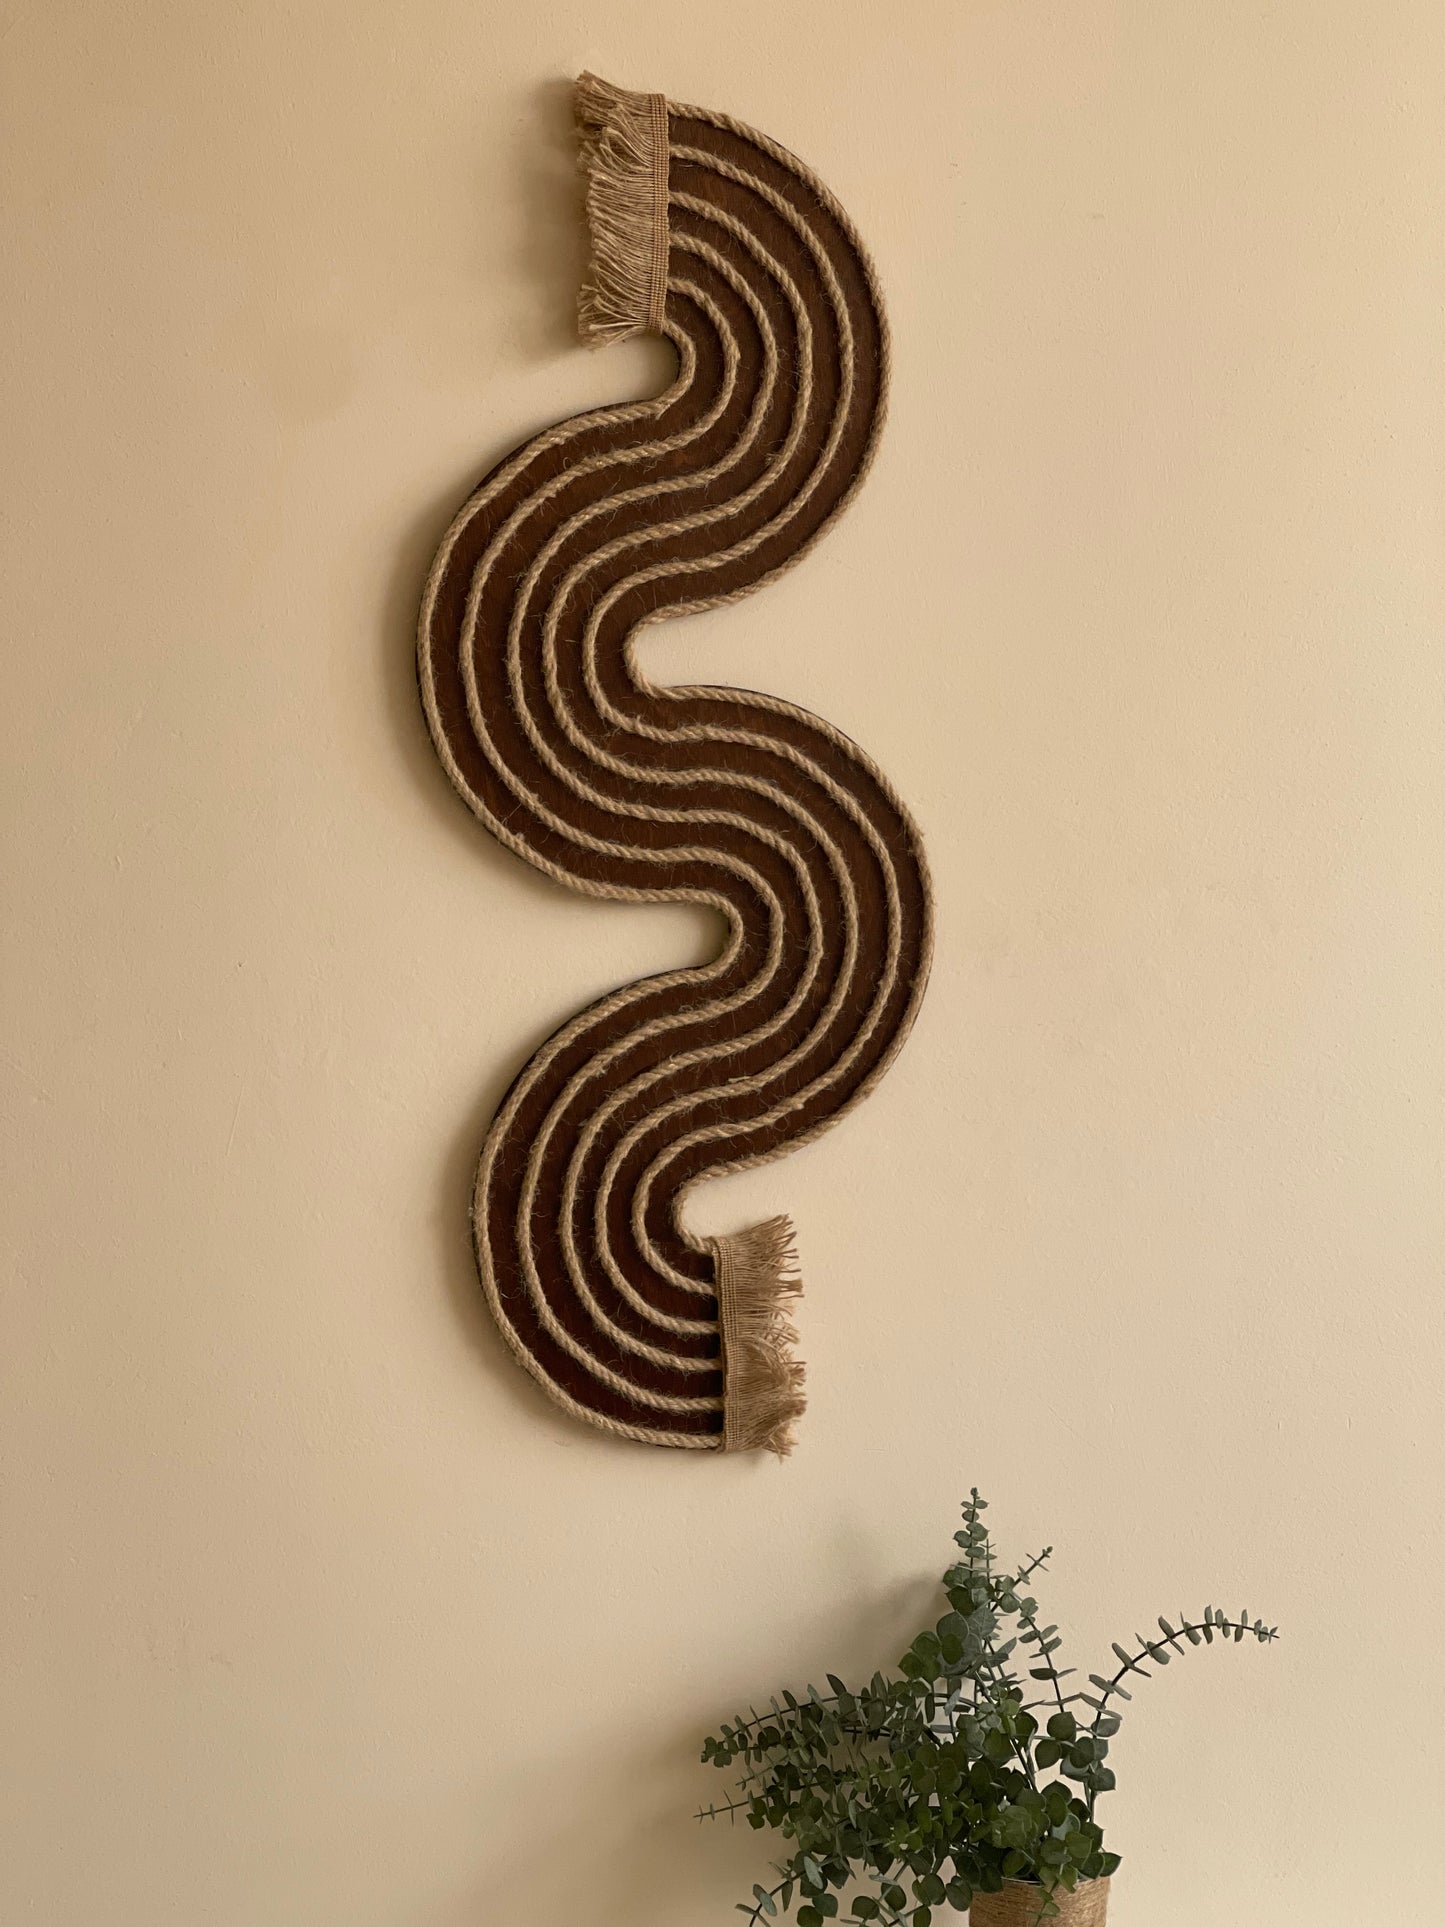 Twirls of brown